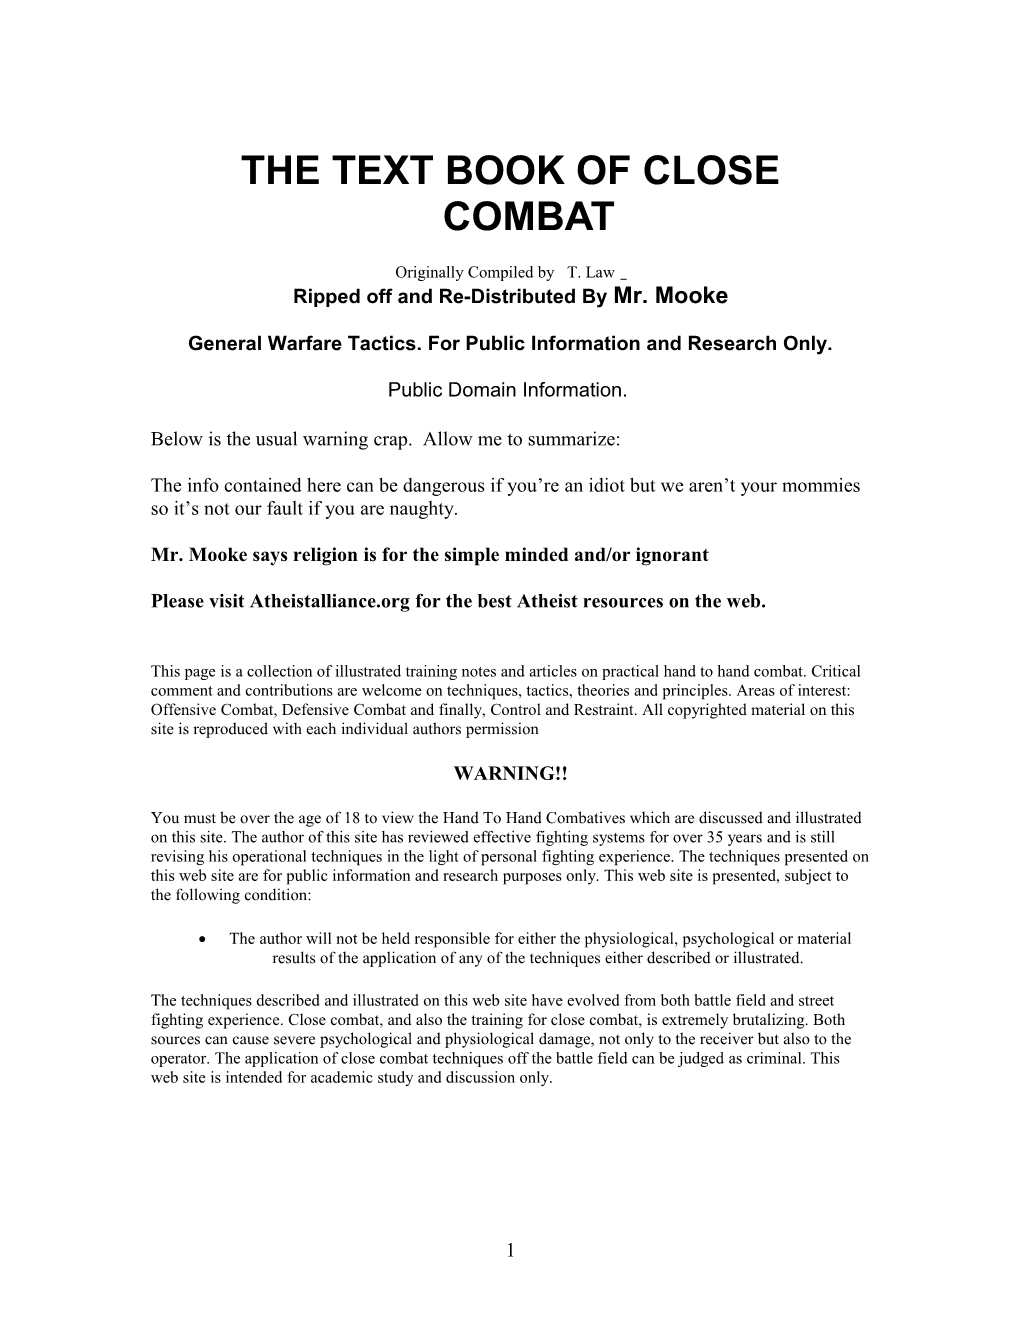 The Text Book of Close Combat - Ebook